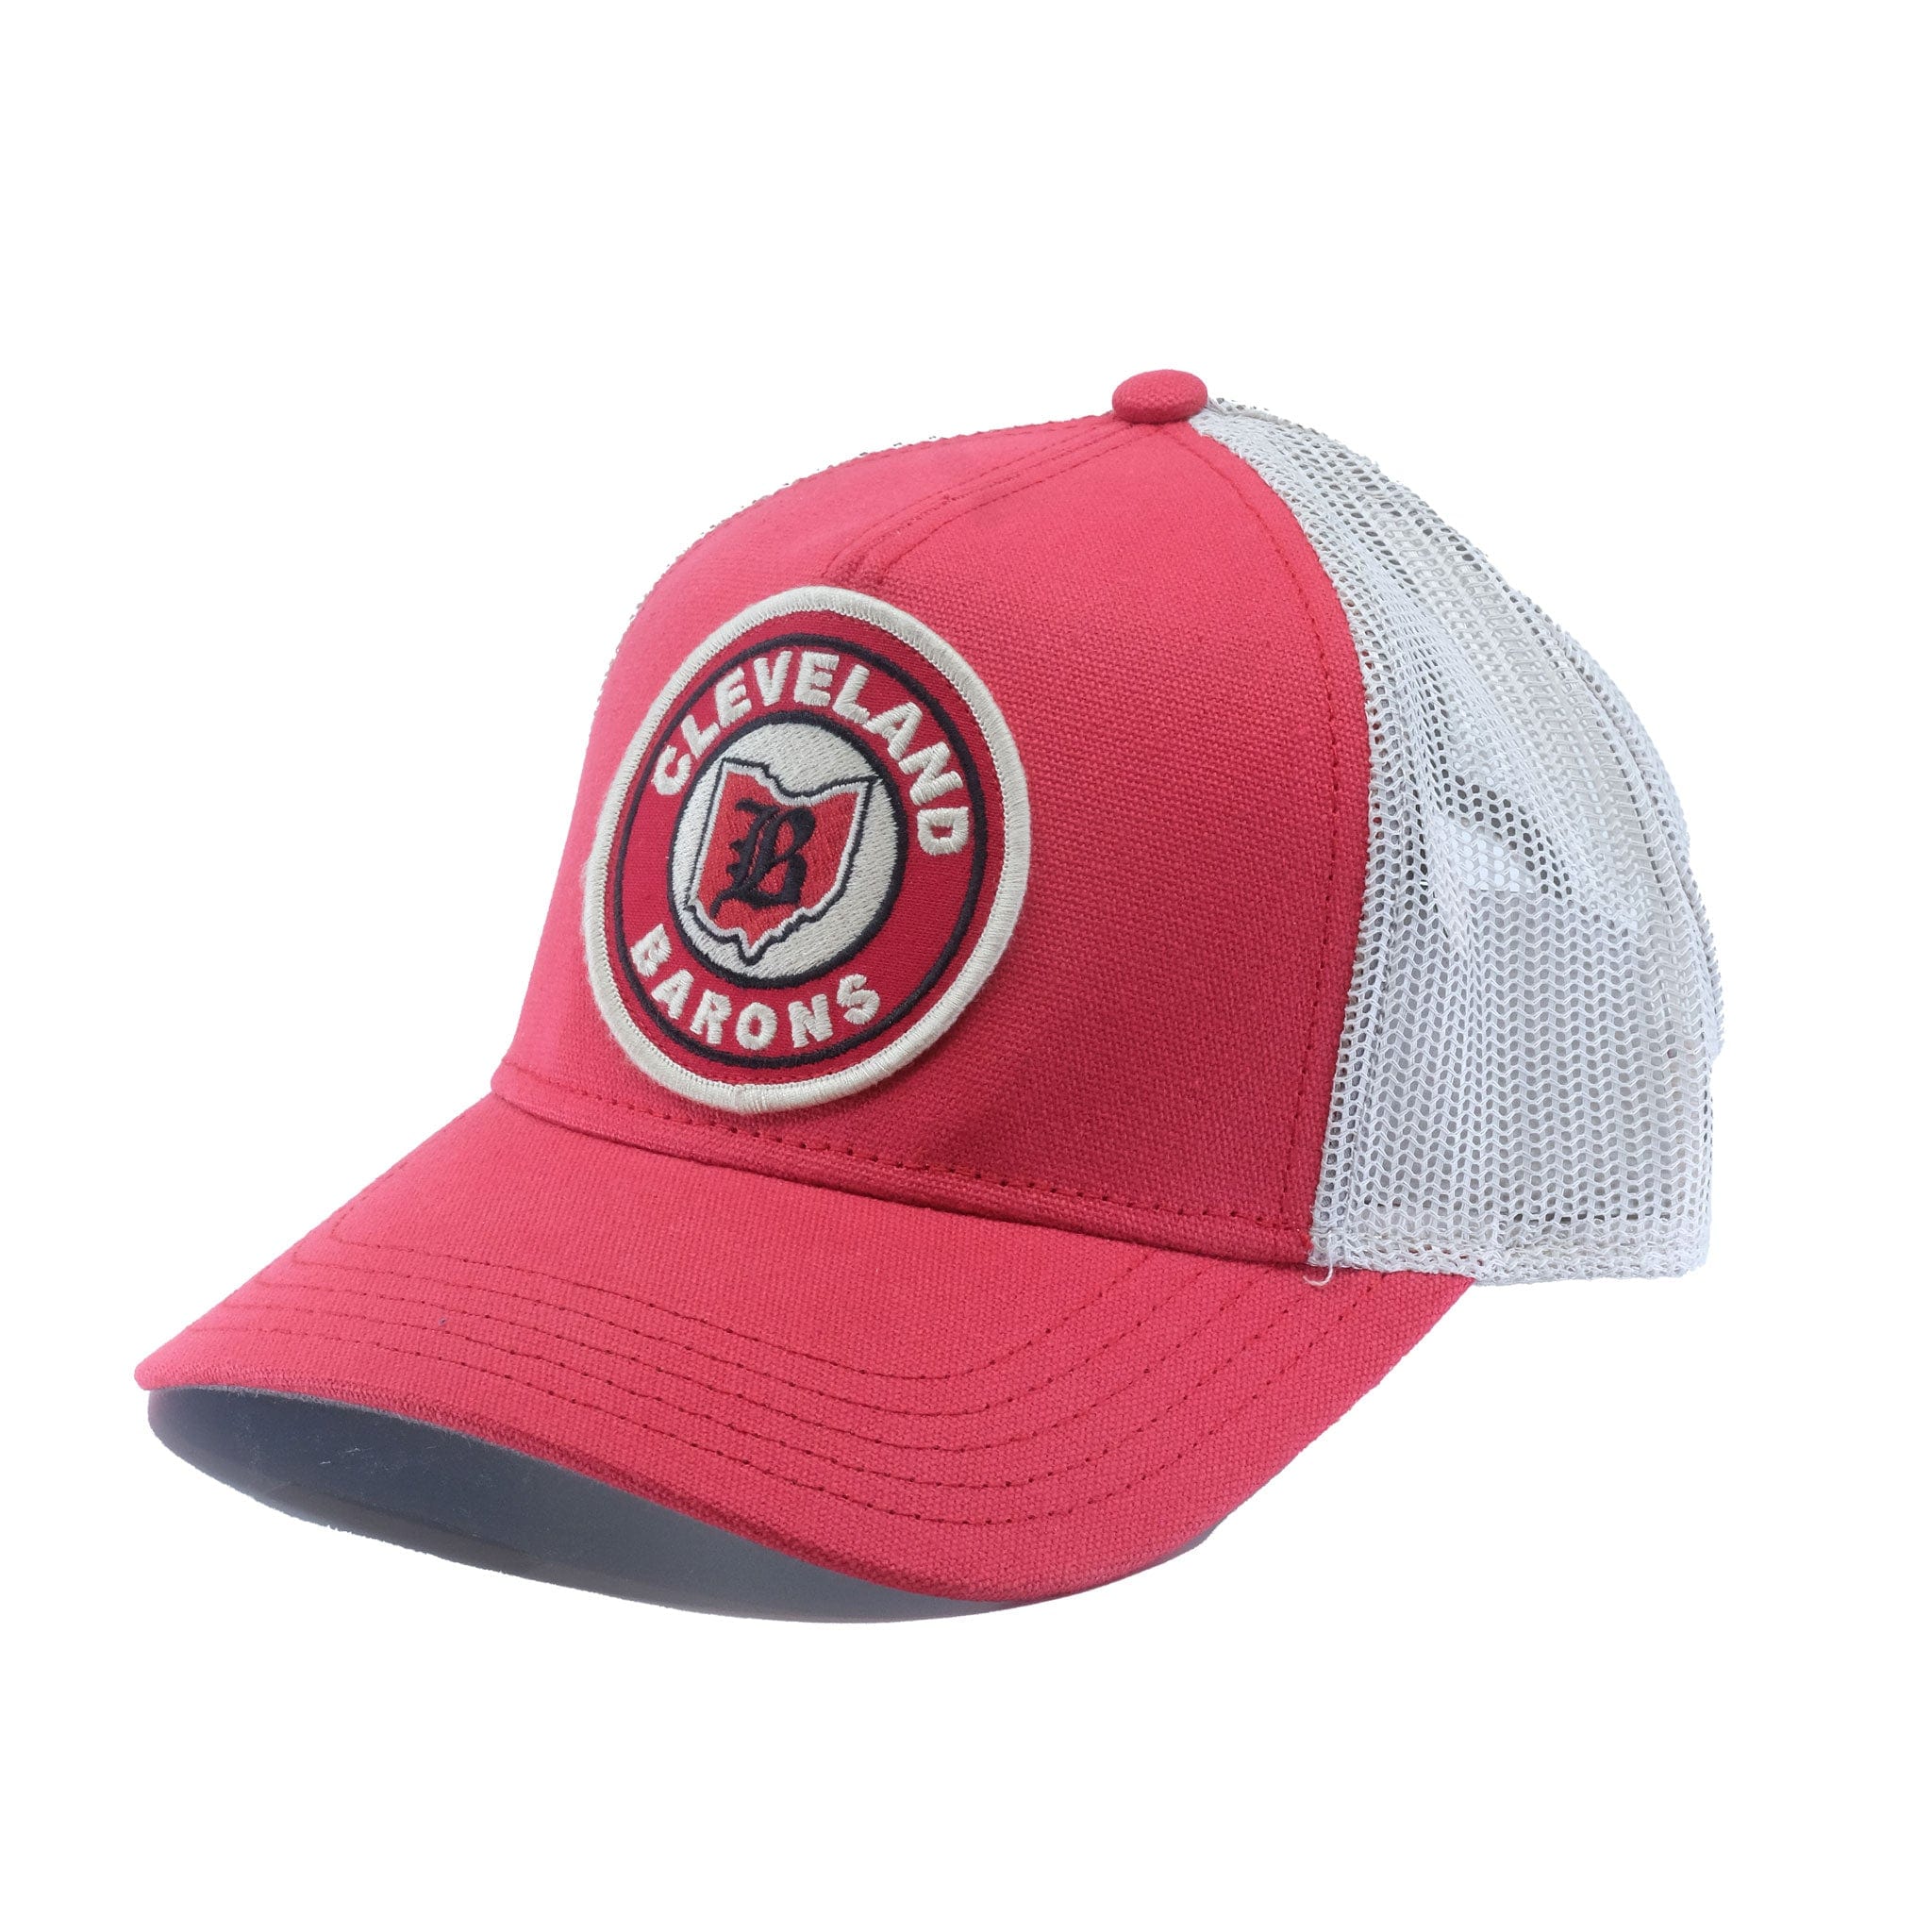 NHL New Jersey Devils Black Curved Bill Hat Cap Adjustable American Needle  - Cap Store Online.com